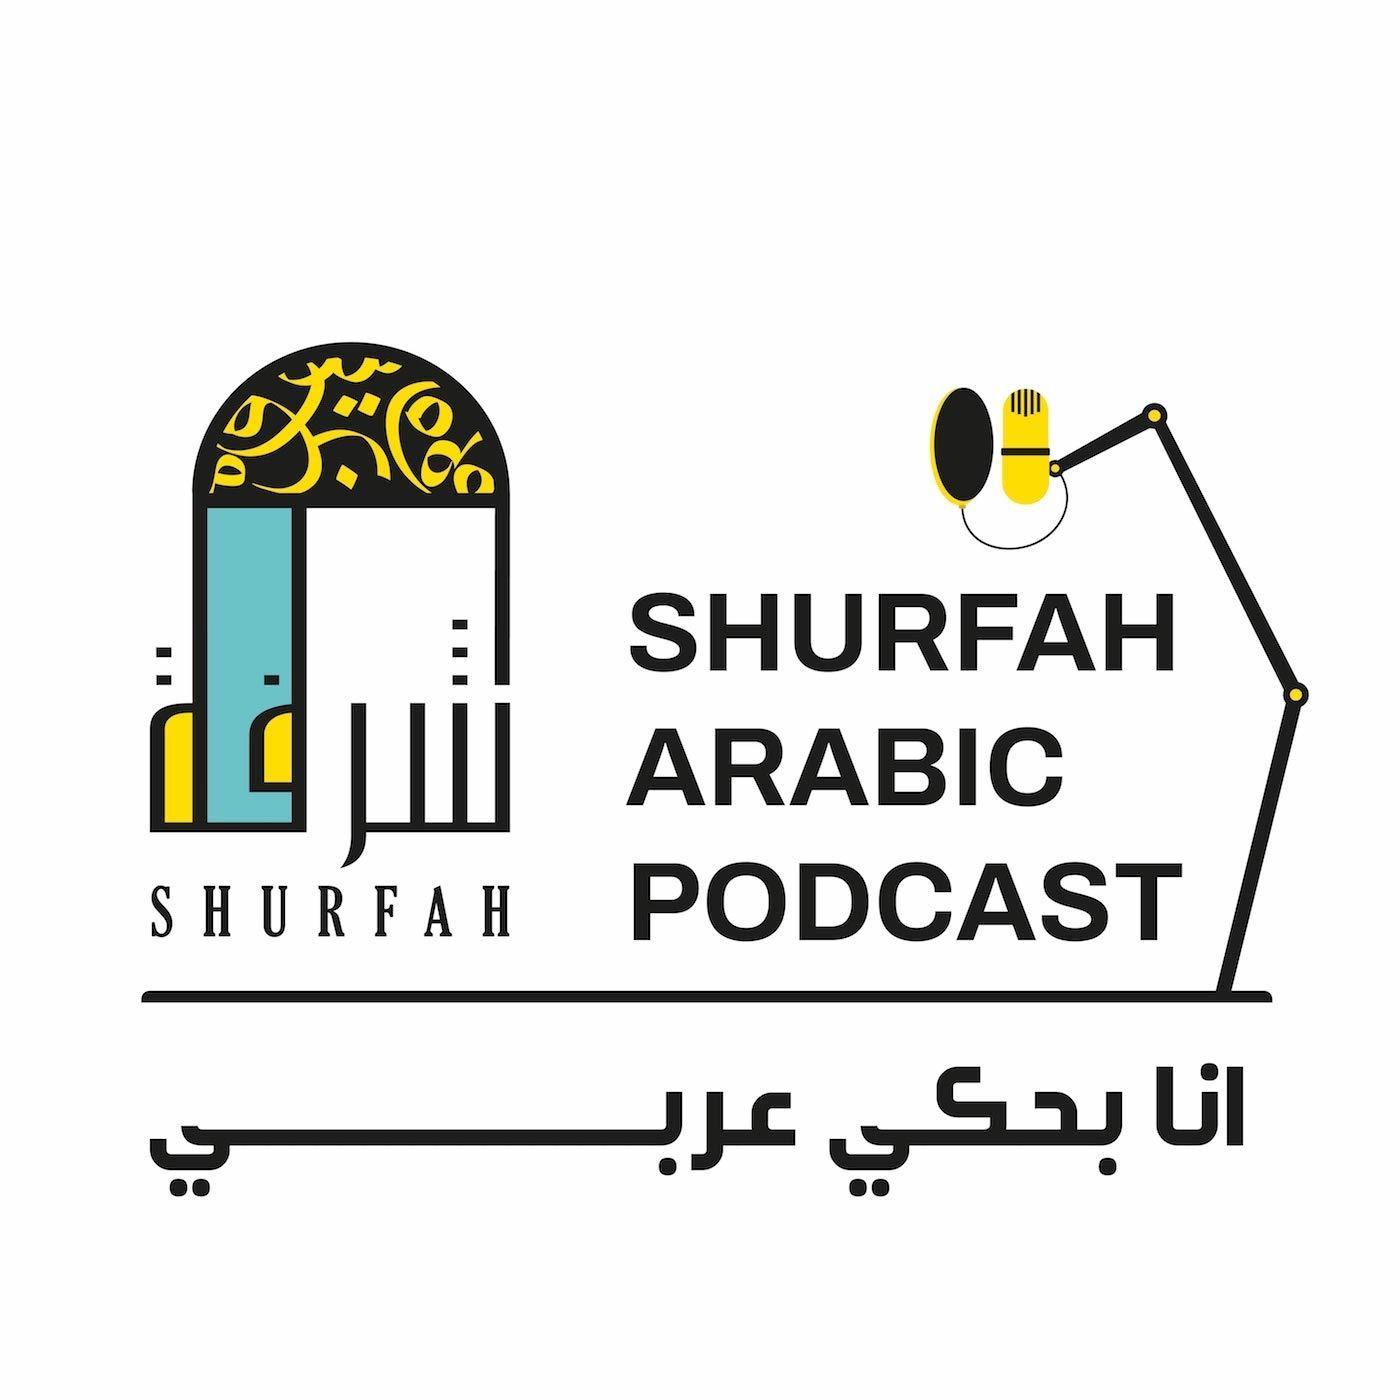 Shurfah Arabic Podcast